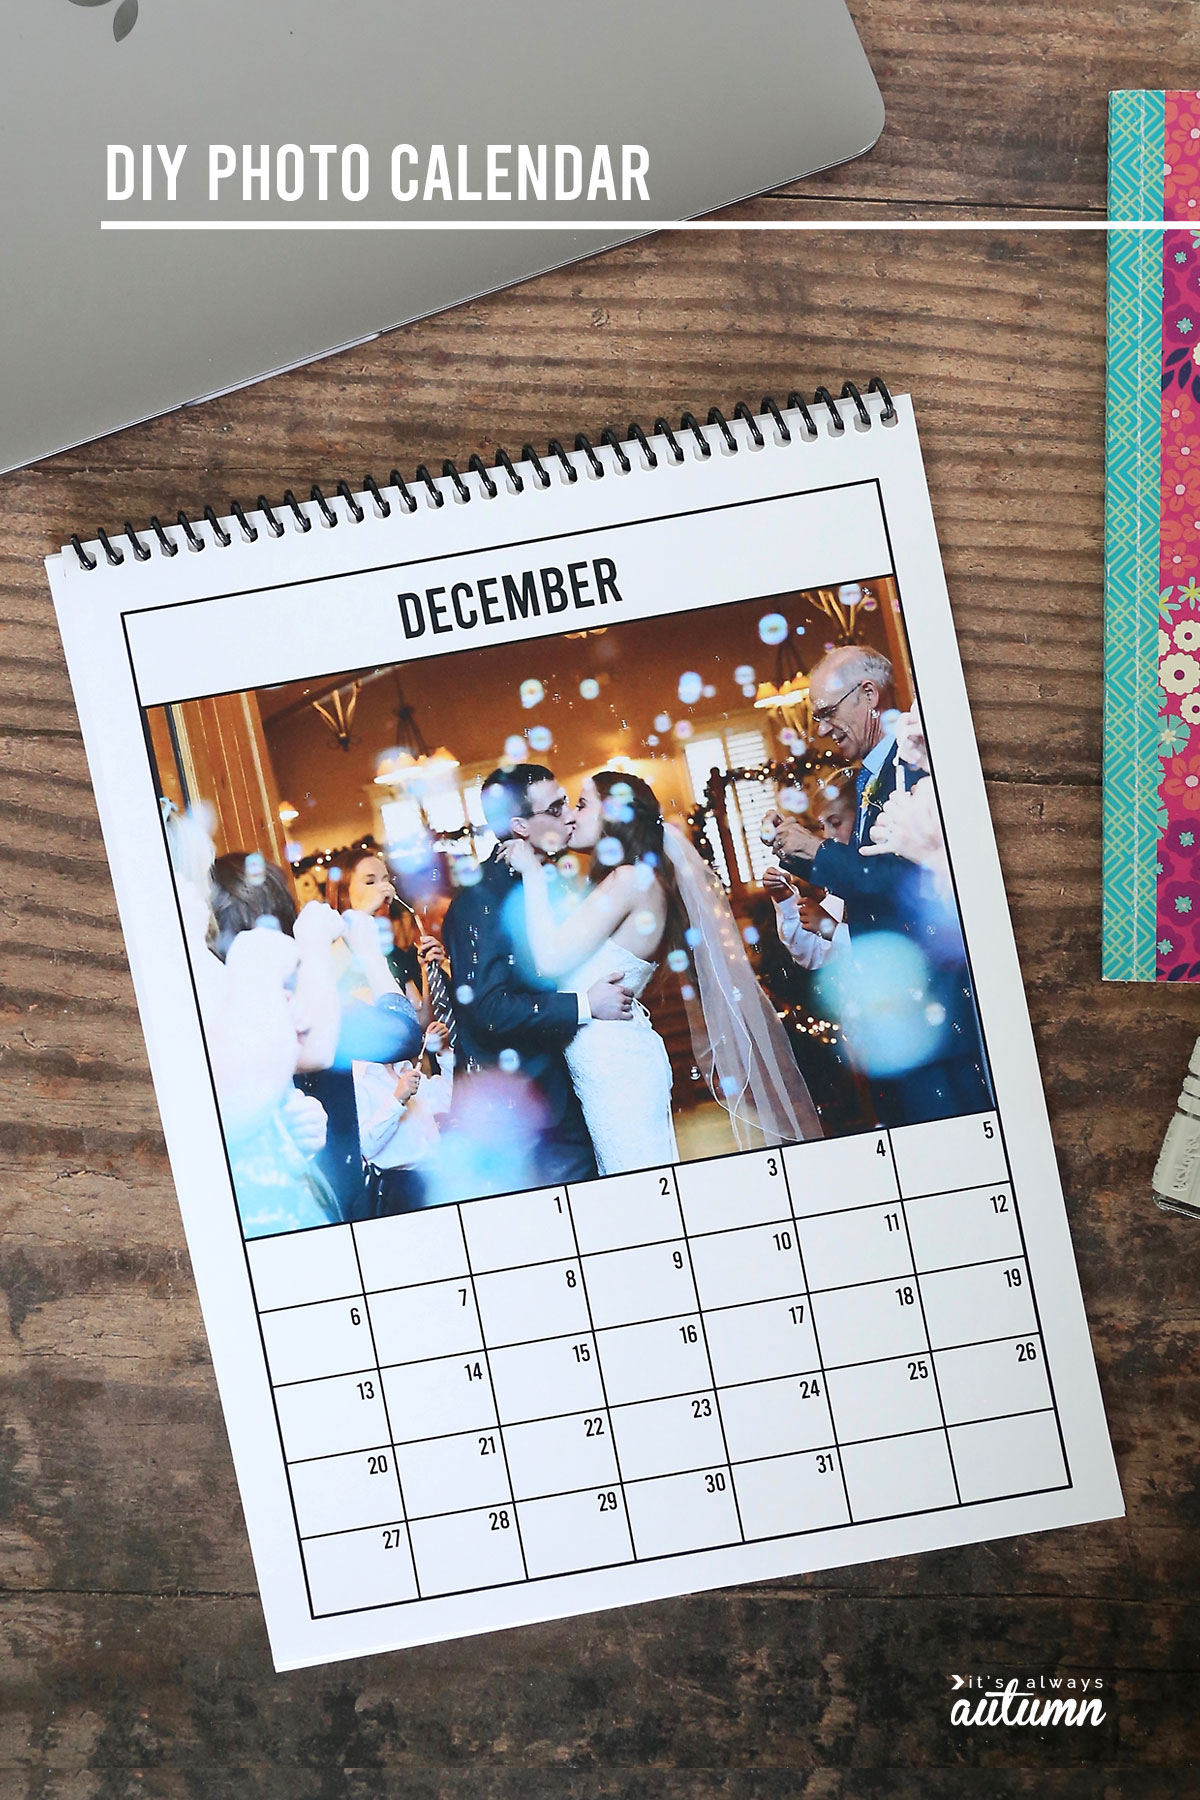 This printable 2020 photo calendar makes a great homemade gift!